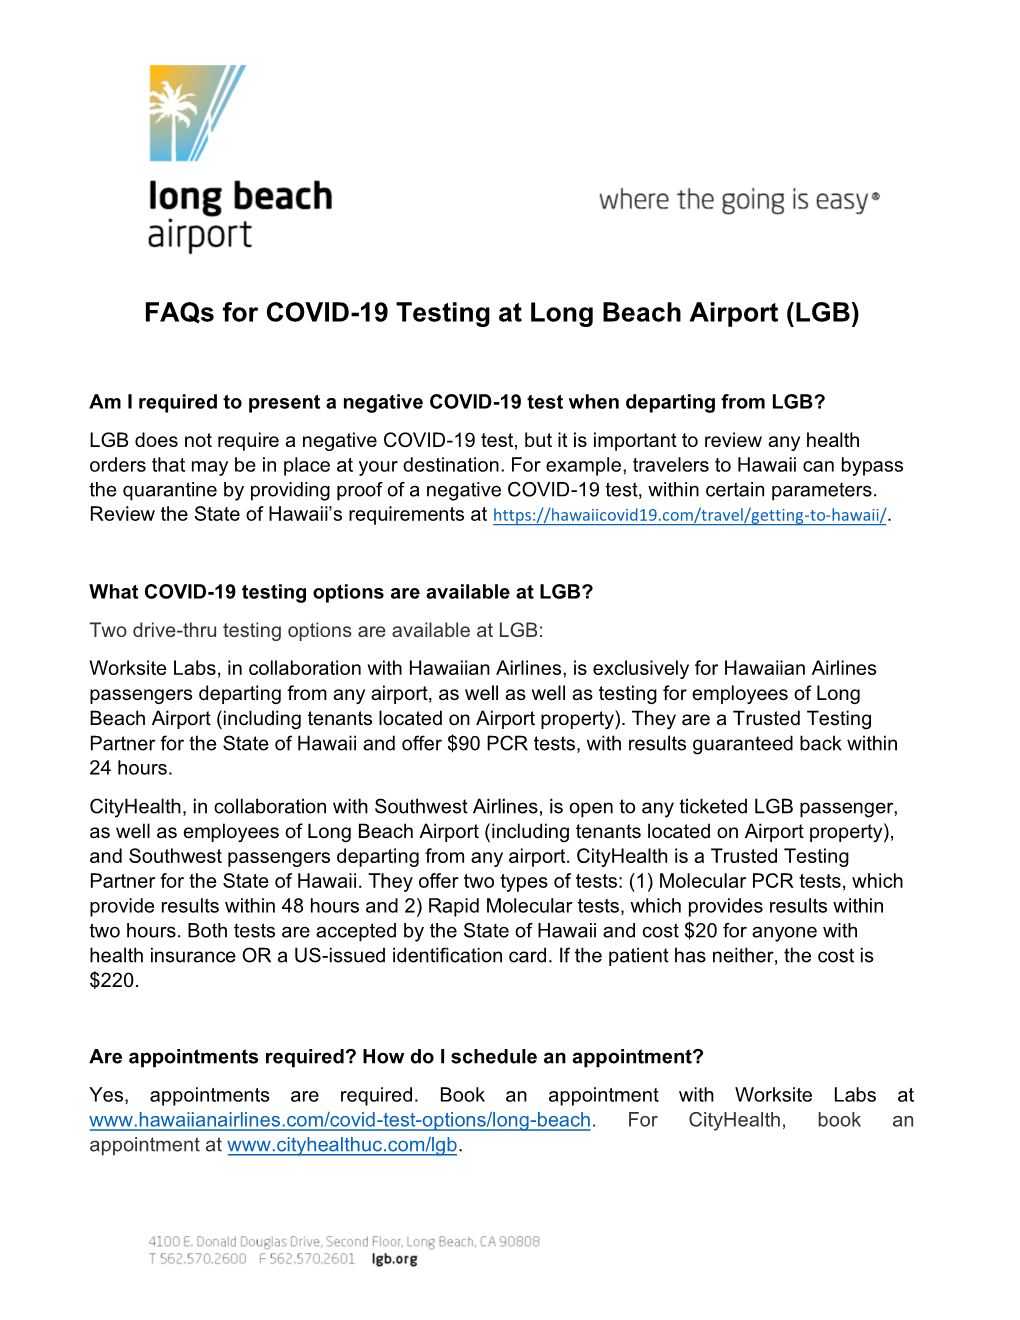 Faqs for COVID-19 Testing at Long Beach Airport (LGB)